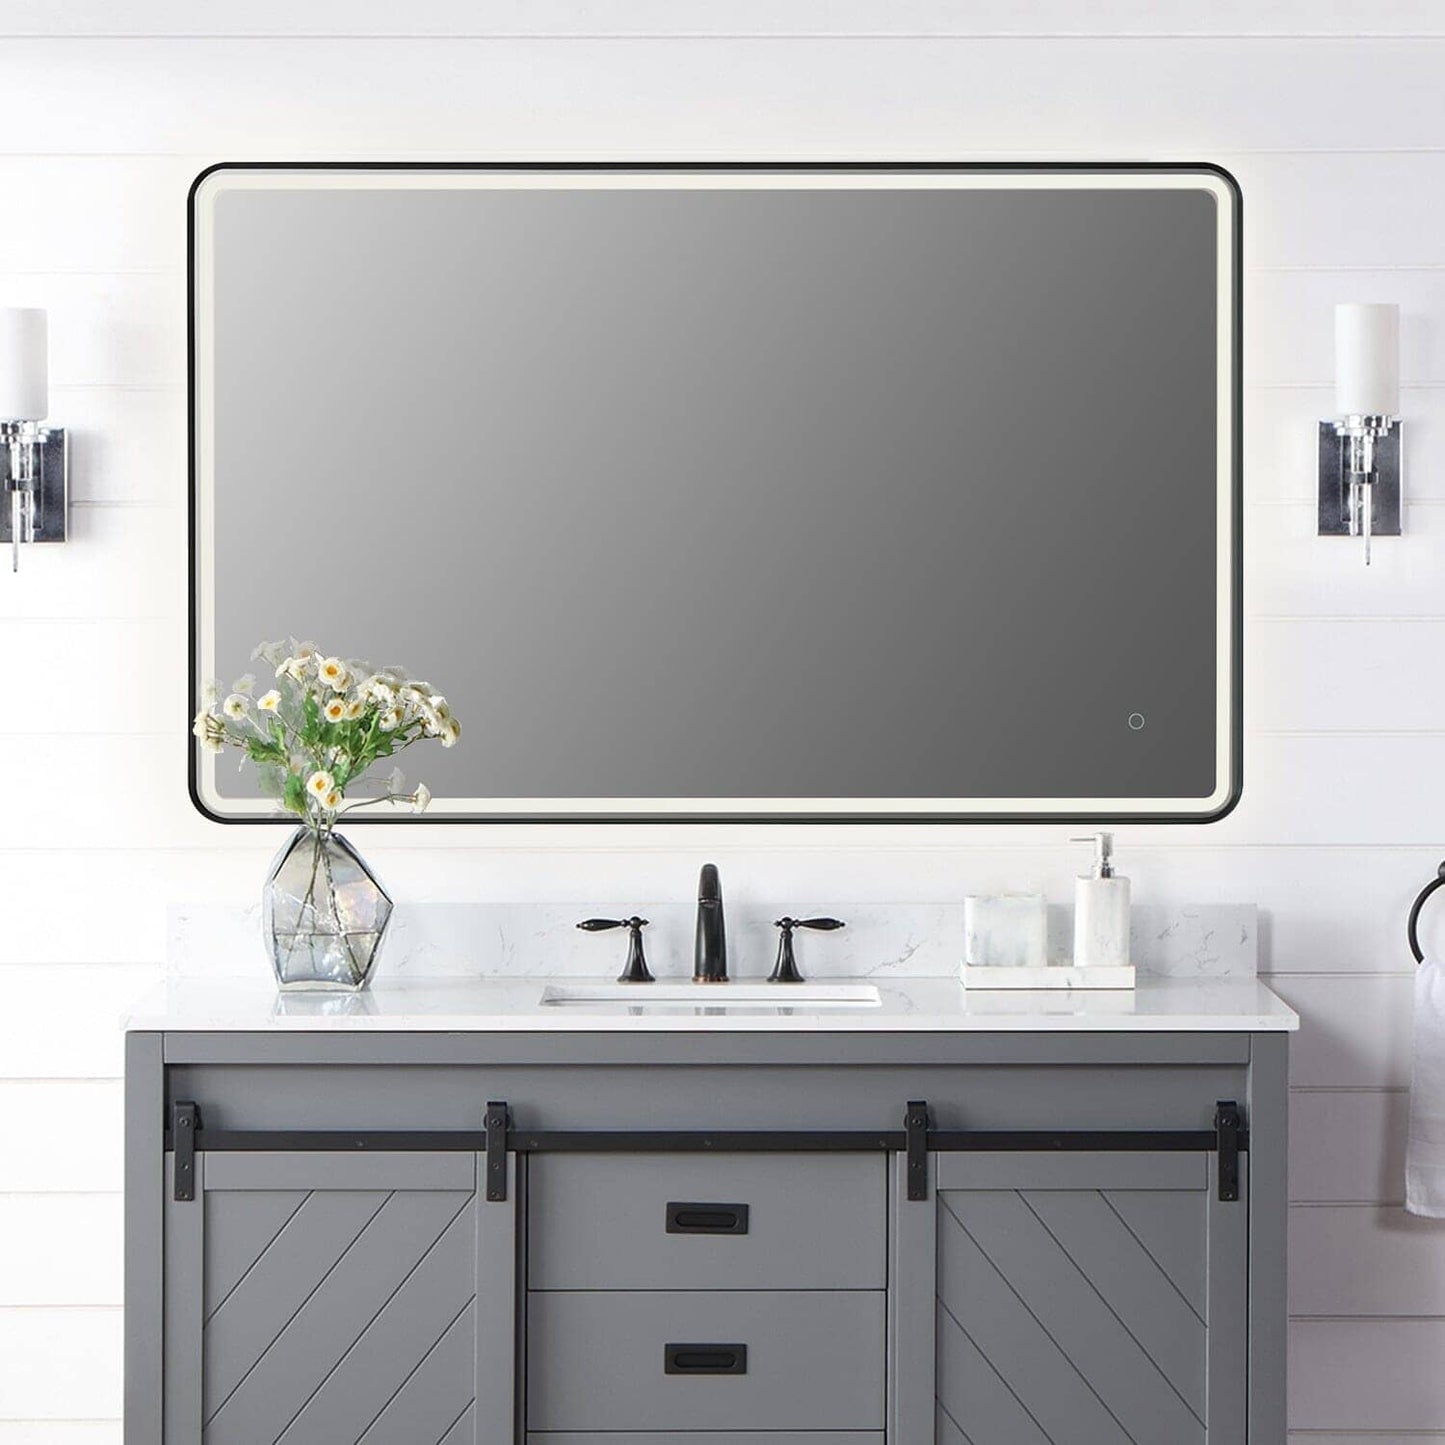 LED Bathroom Mirror - Altair Viaggi 48W-30H - 753048-LED-BF